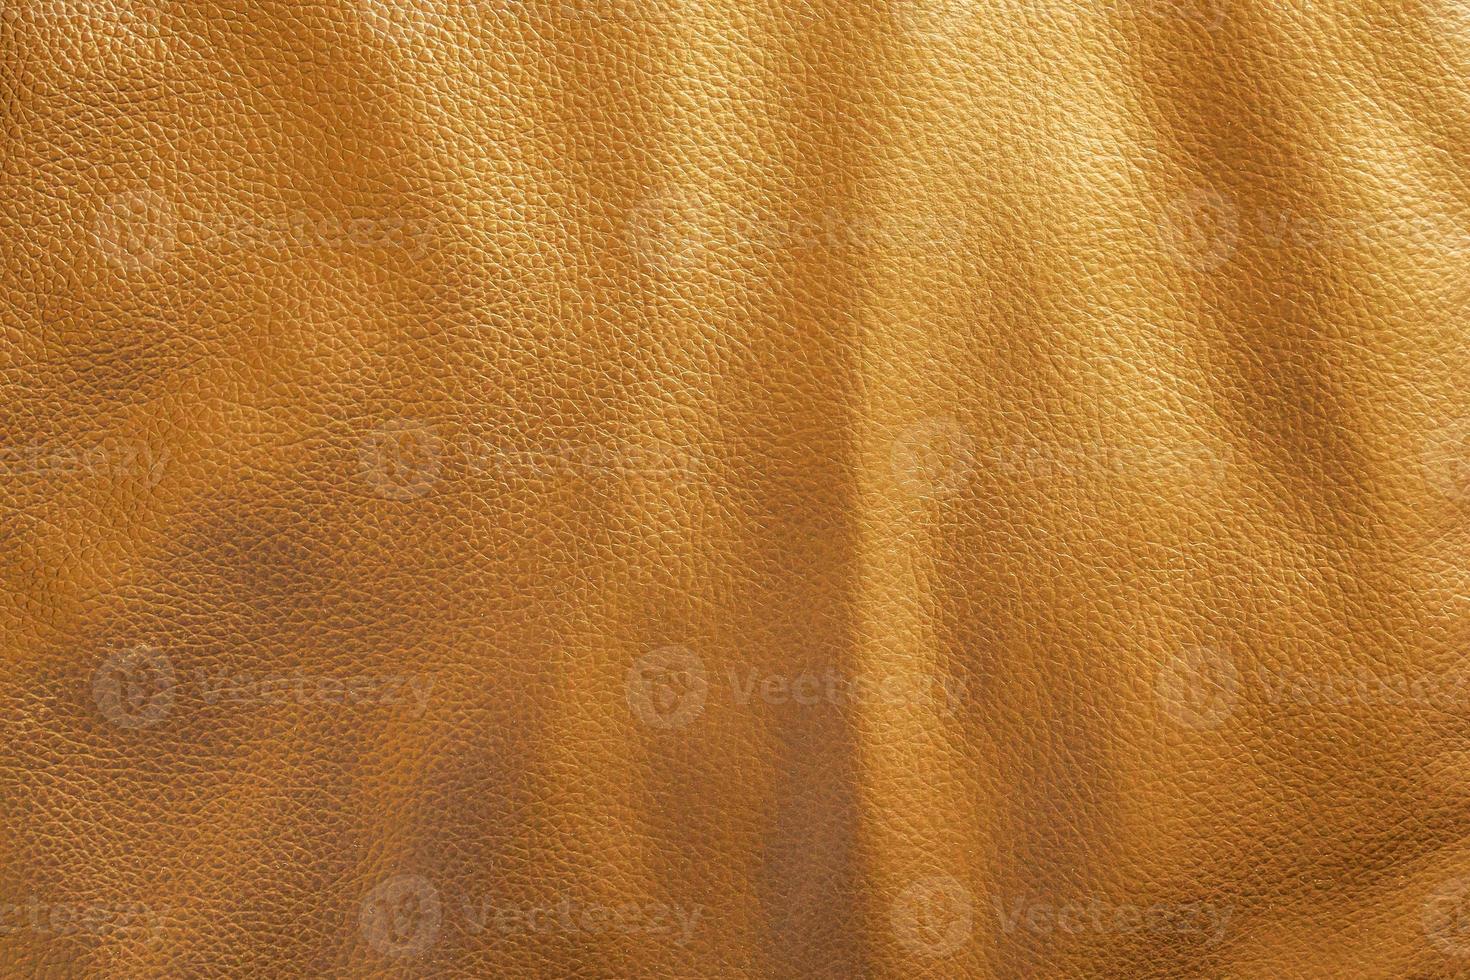 Luxury leather texture surface background photo